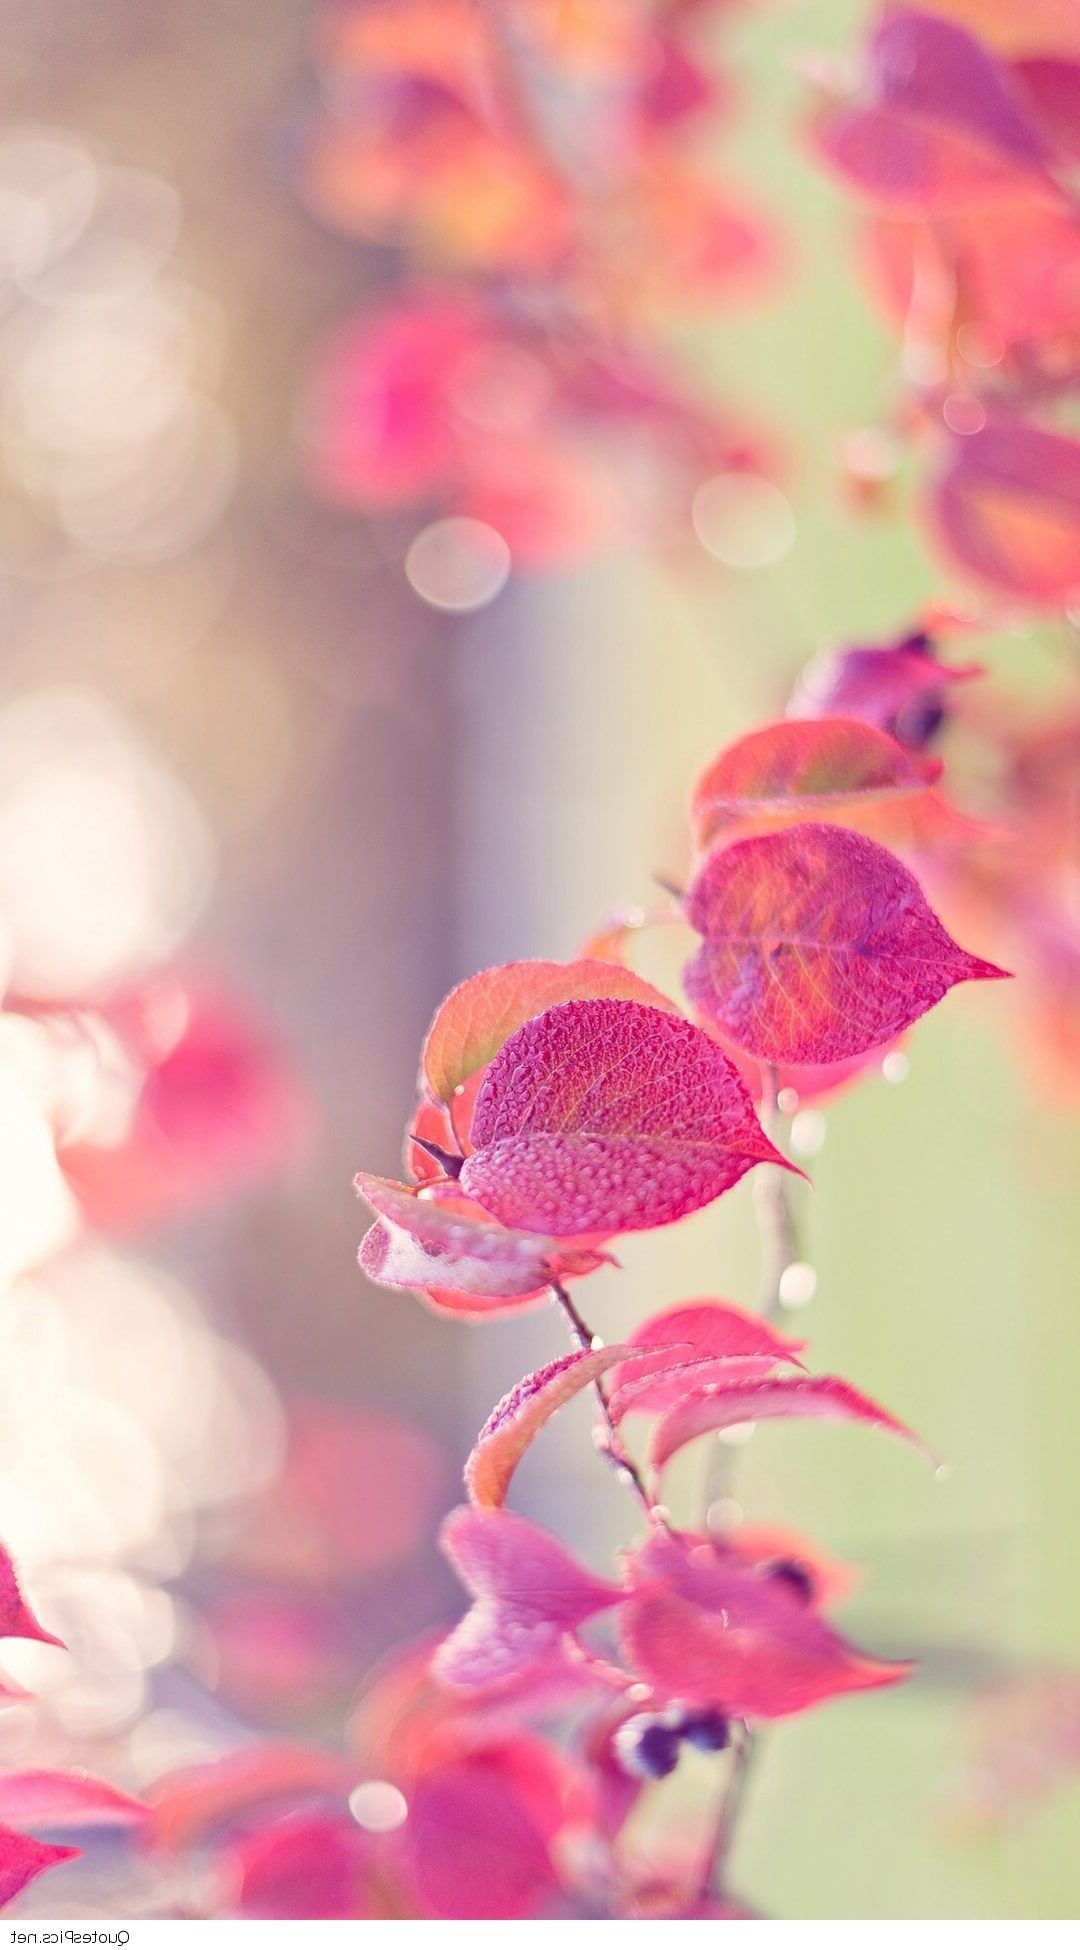 fondos de pantalla femeninos,rosado,rojo,hoja,flor,planta